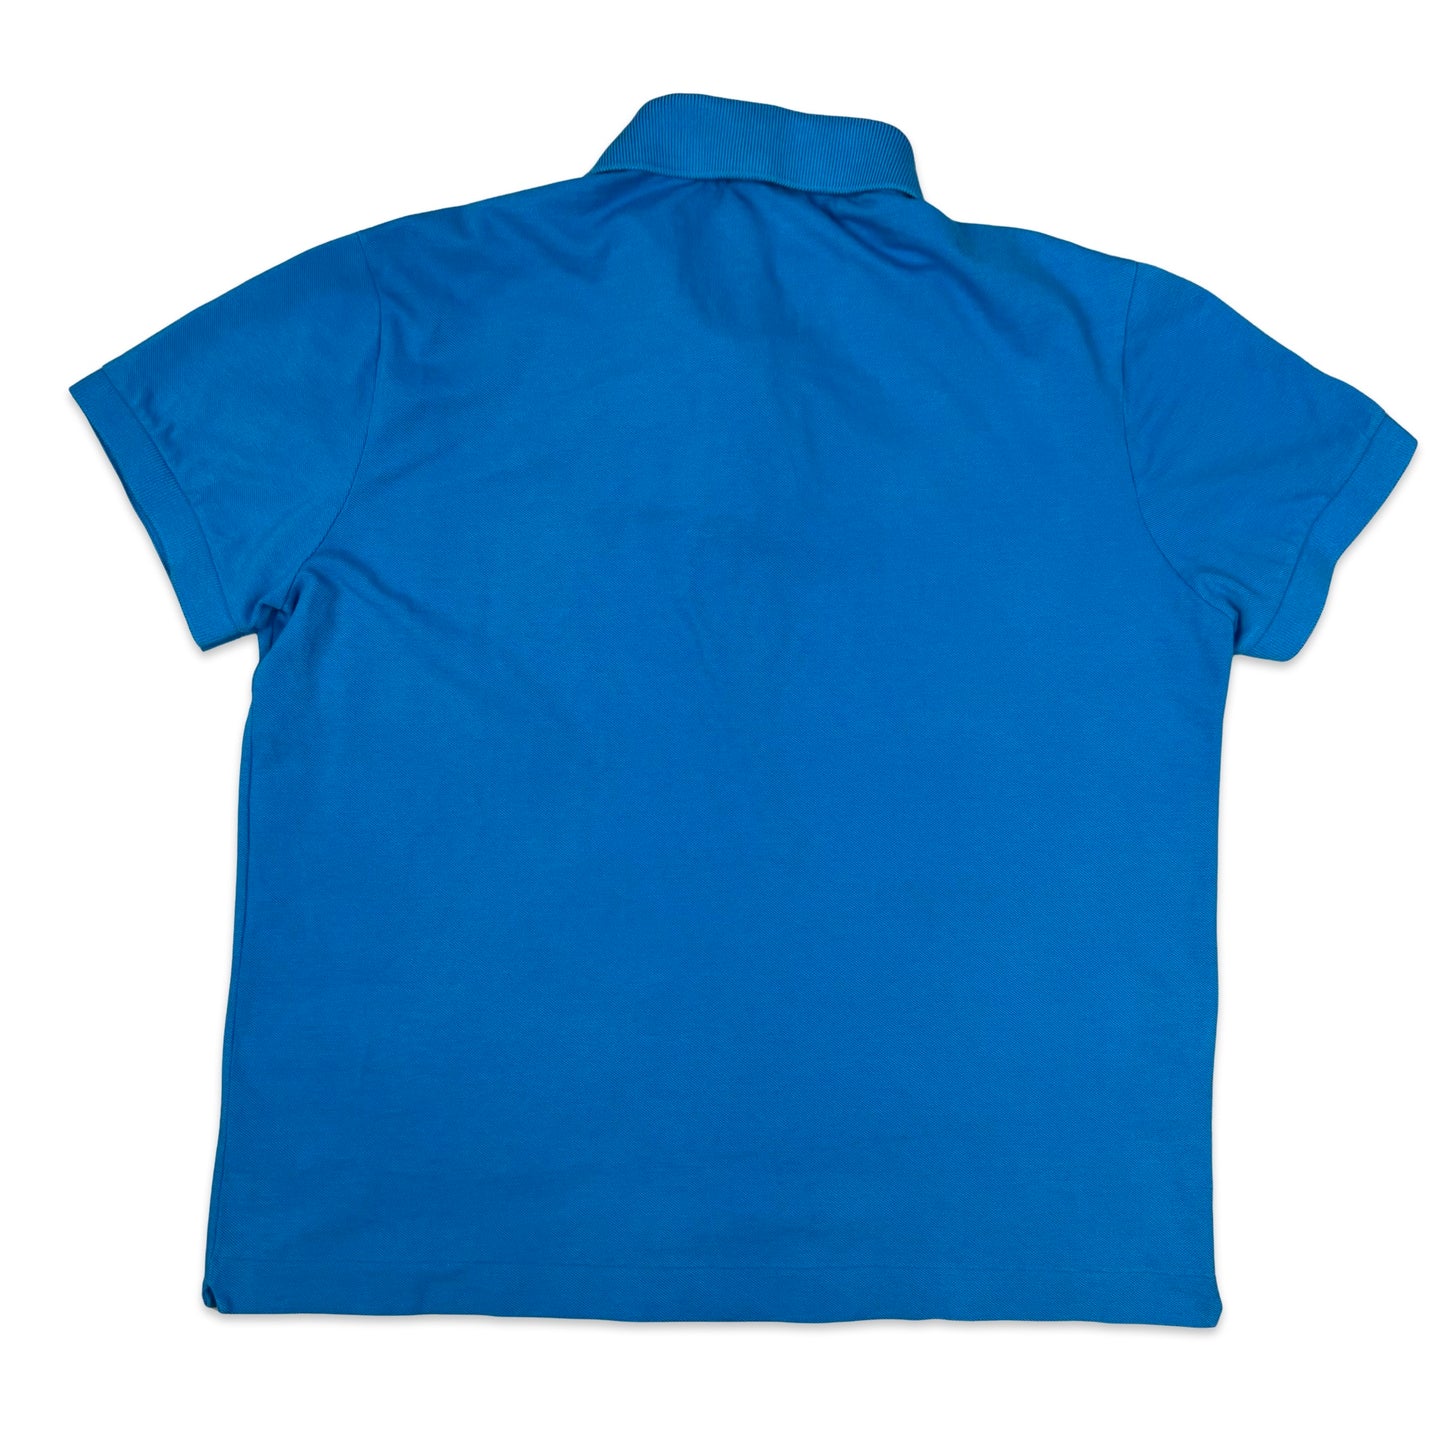 Lacoste Blue Polo Shirt S M